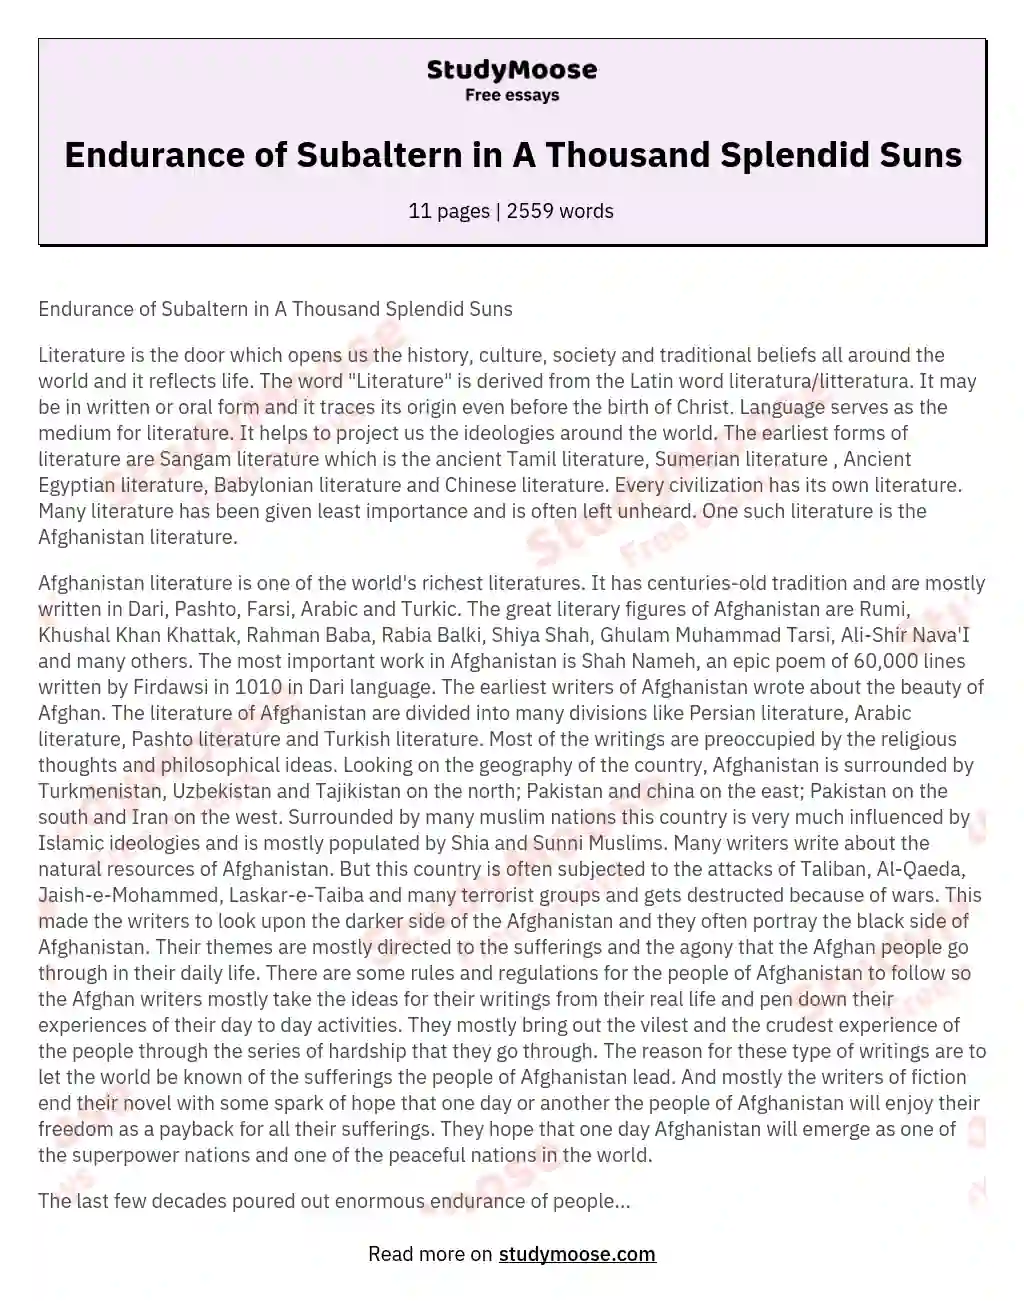 Endurance of Subaltern in A Thousand Splendid Suns